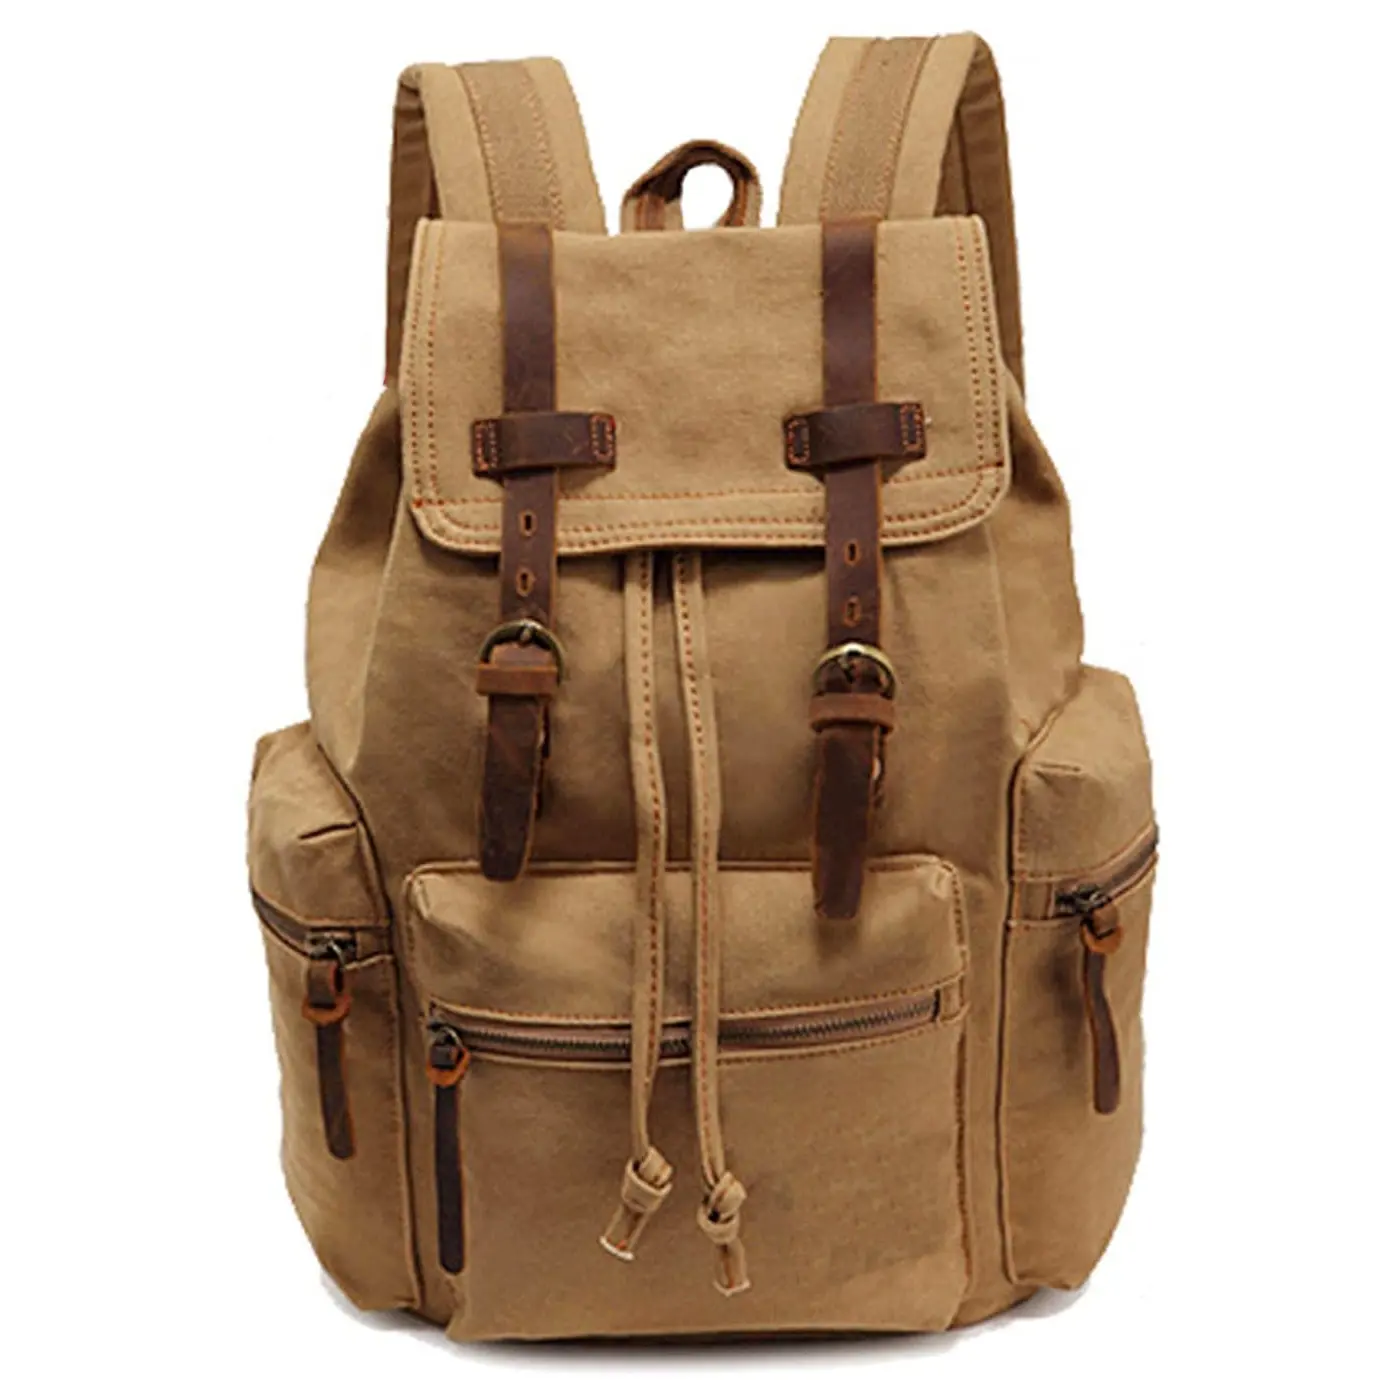 Waterproof Custom Retro Vintage Style Laptop Rucksack Bag Travel Leather Canvas Backpack for Men